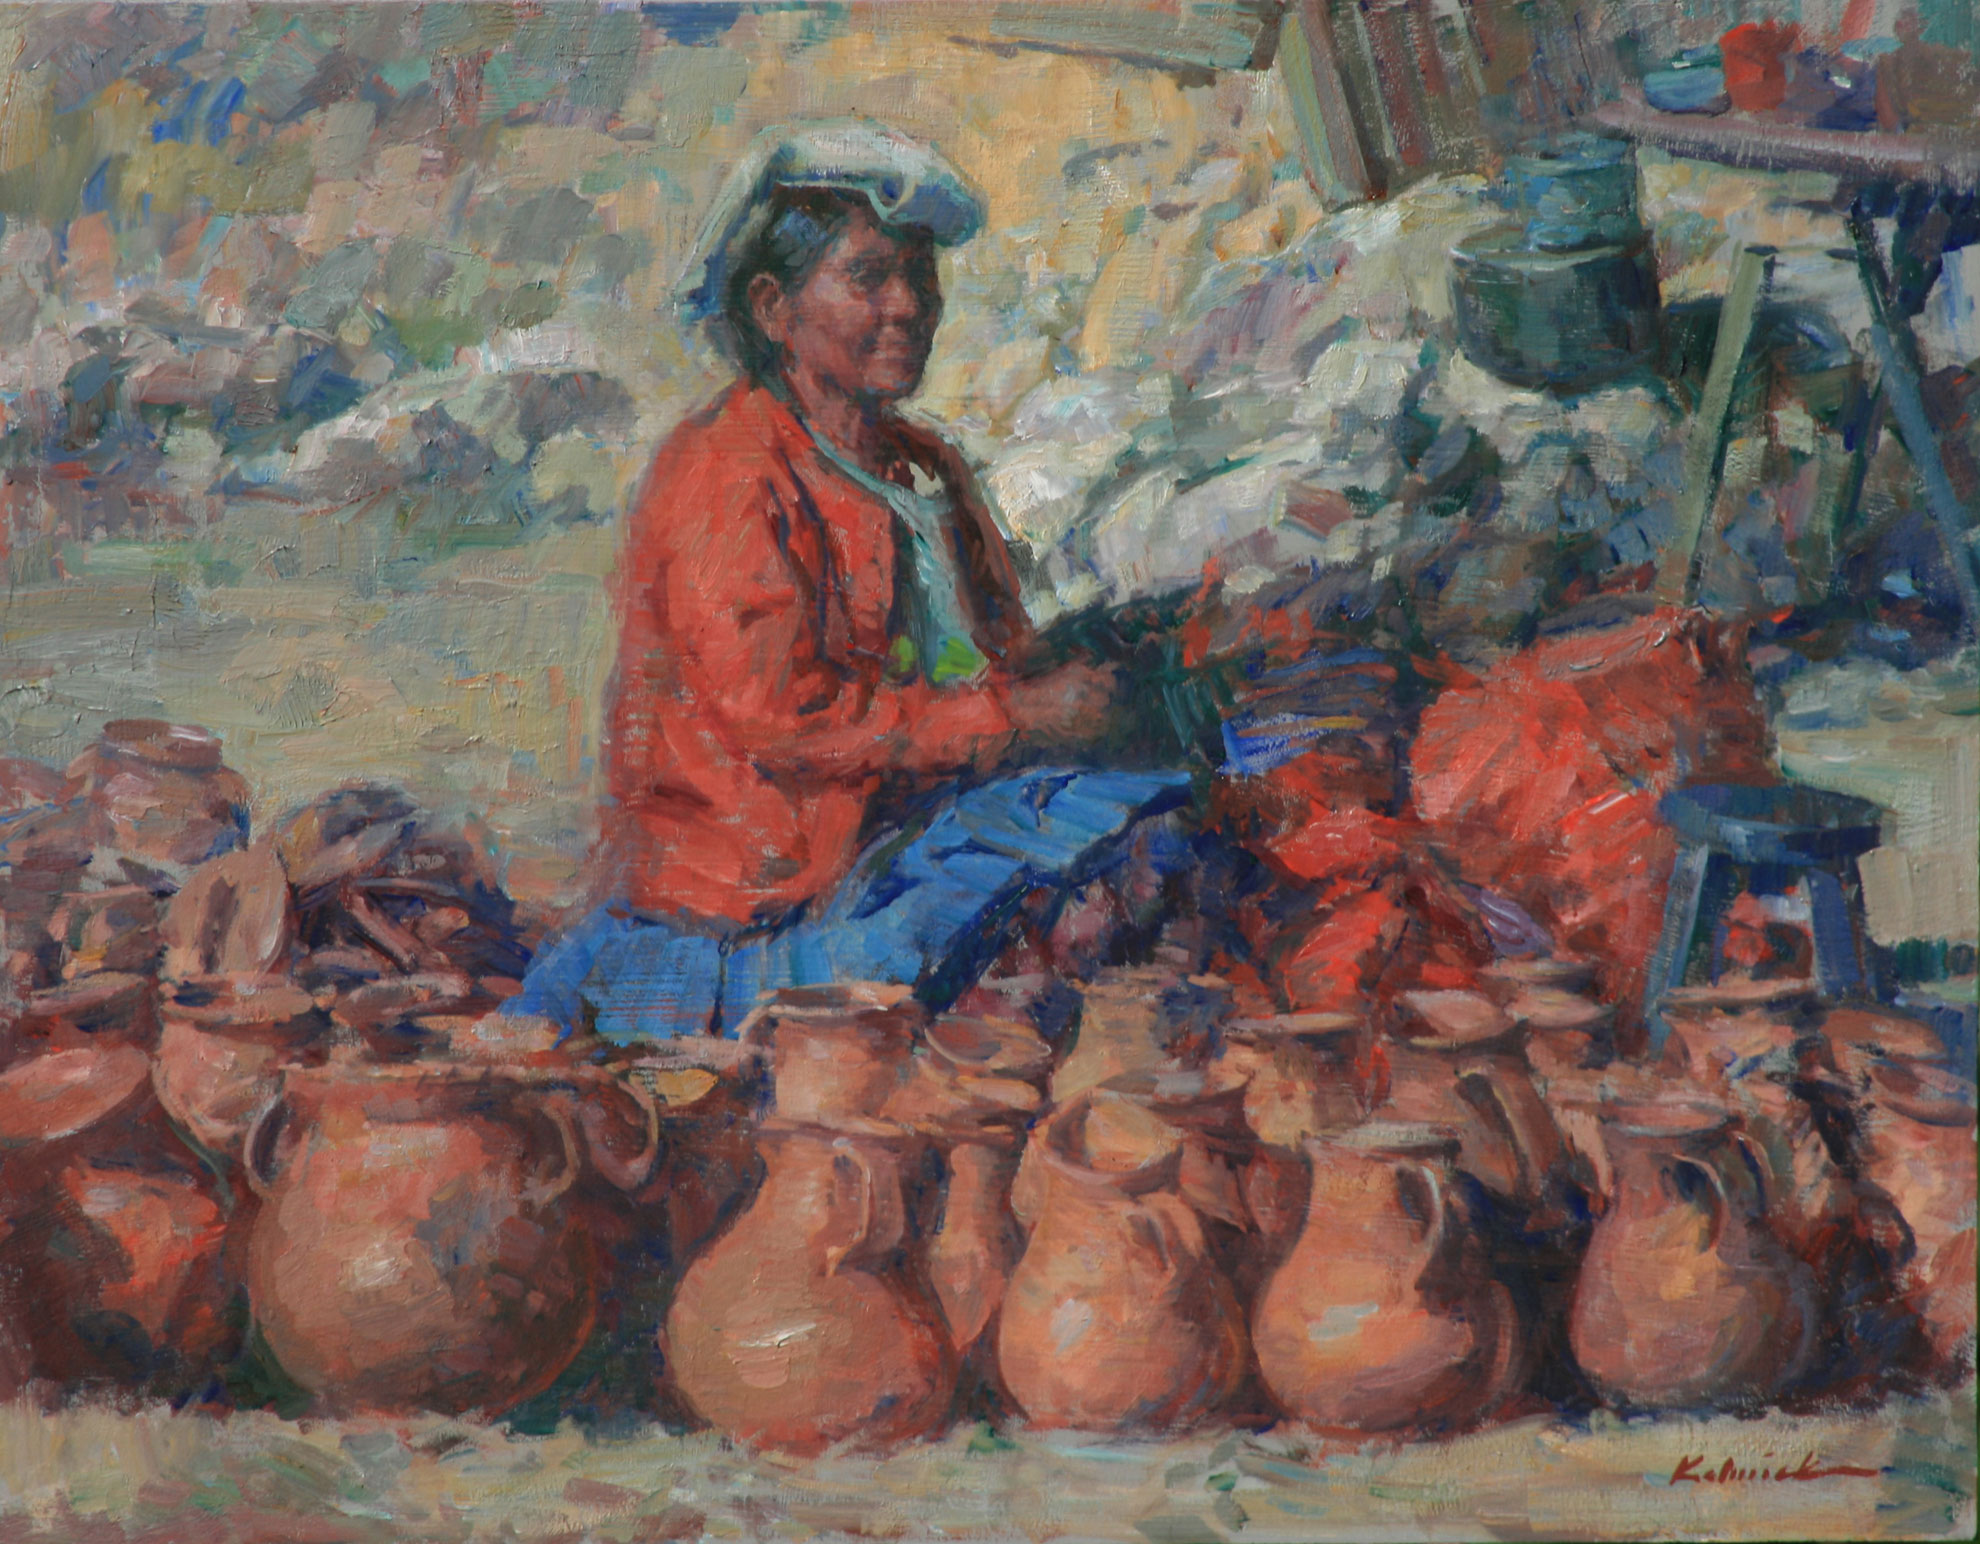 Pottery Seller William Kalwick Jr. North American fine artist - 14"x 18". Oil on canvas. Price US$3,200